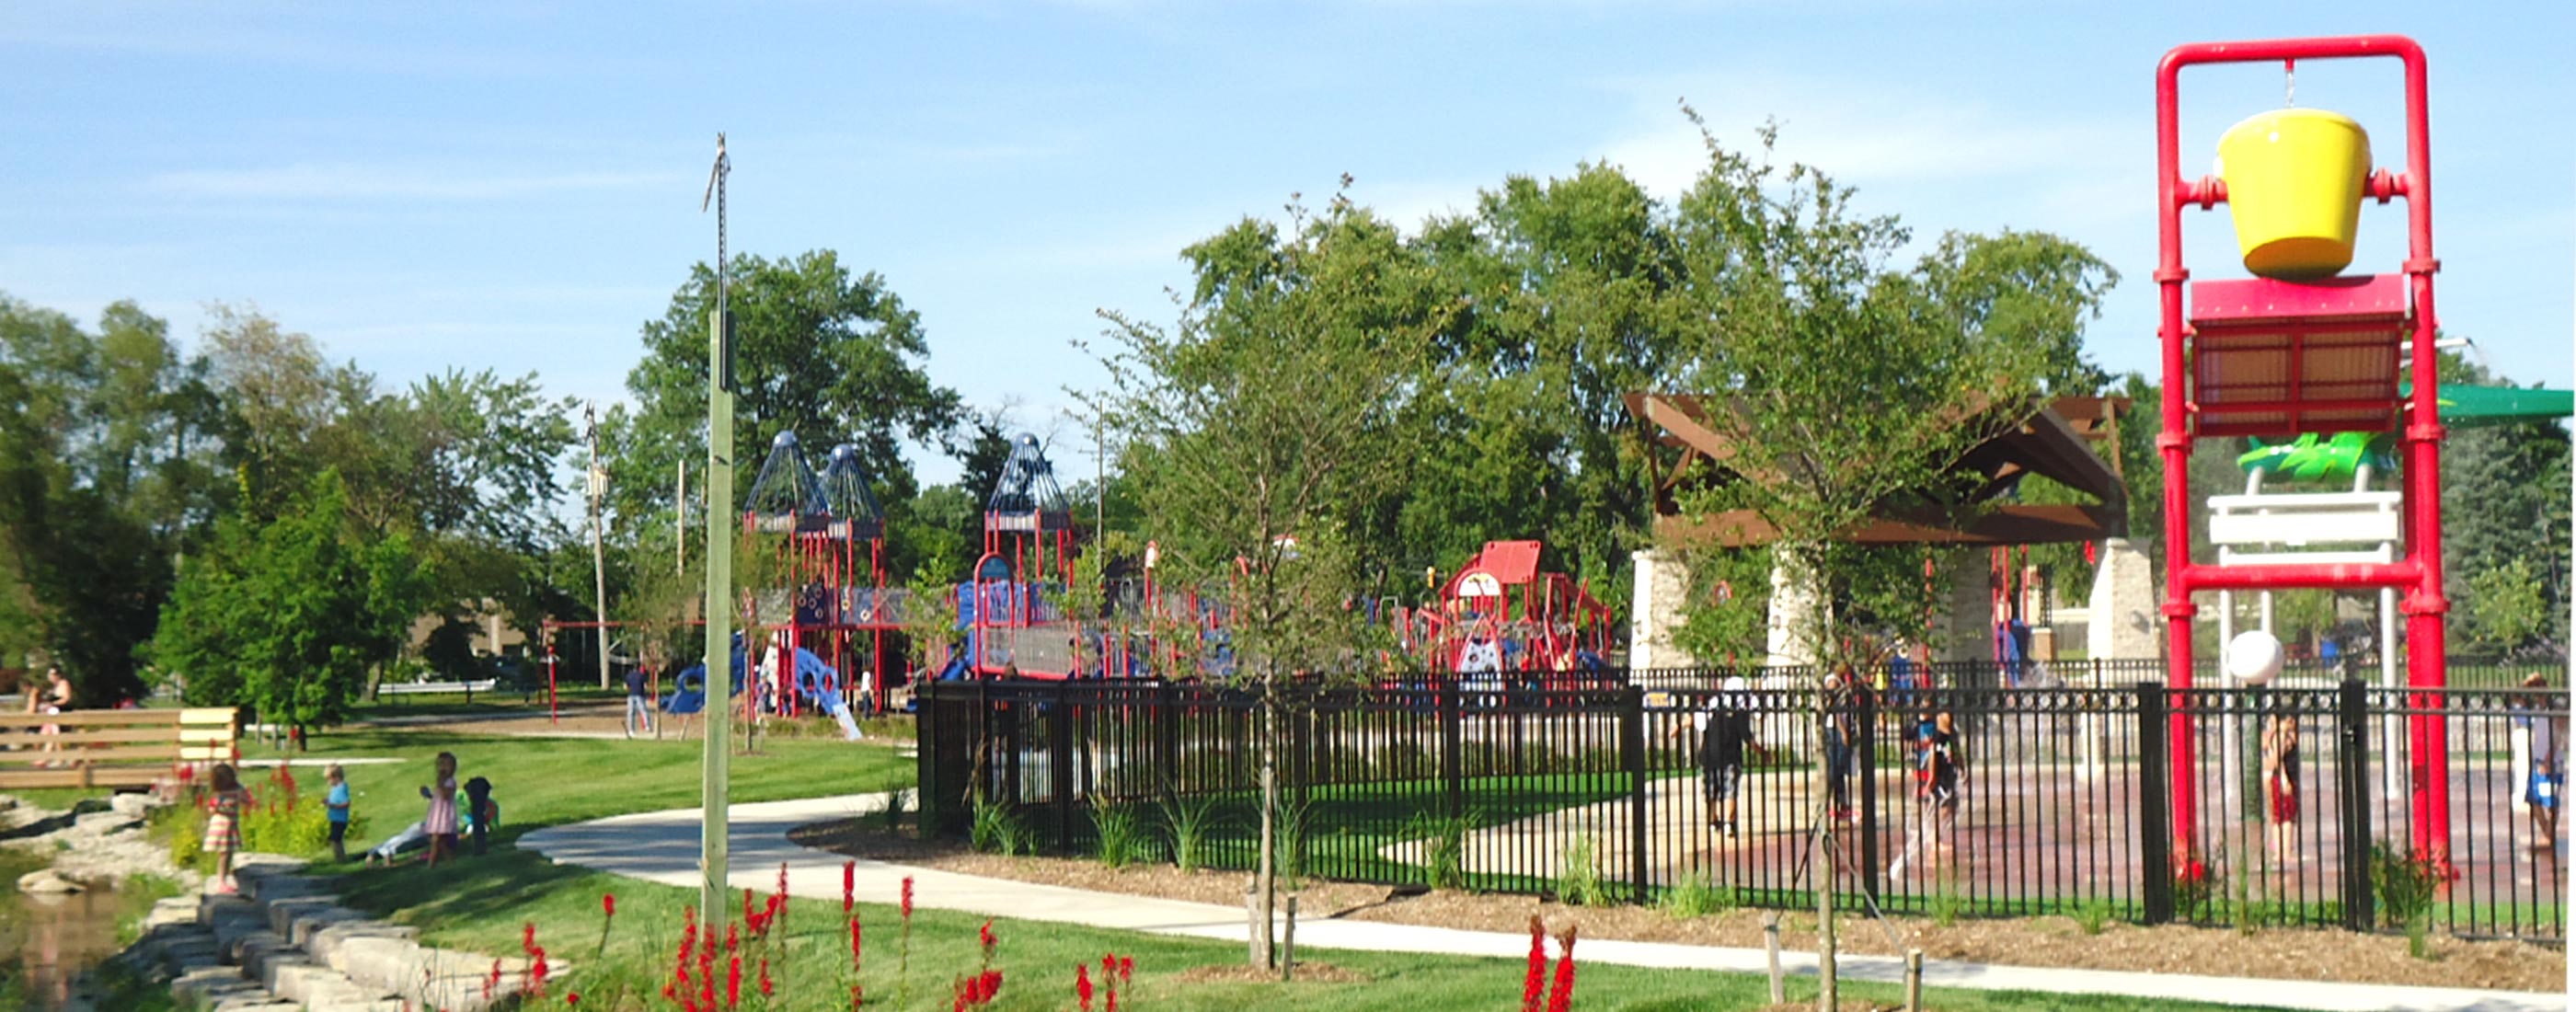 The splash pad and playground at Westland Tattan Park.